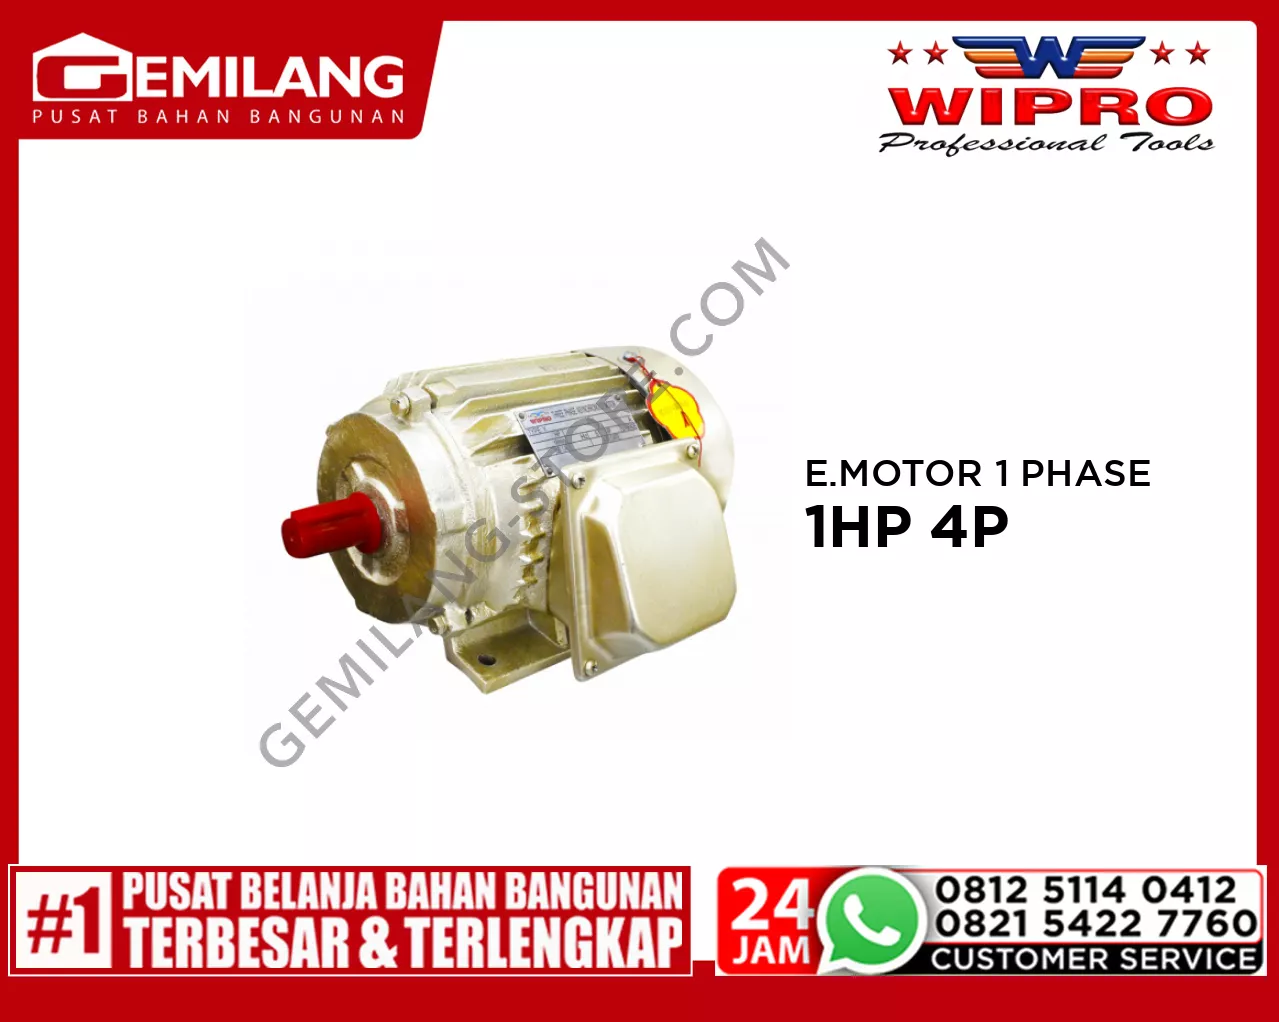 WIPRO ELECTROMOTOR 1 PHASE 1HP 4P (FOAM)